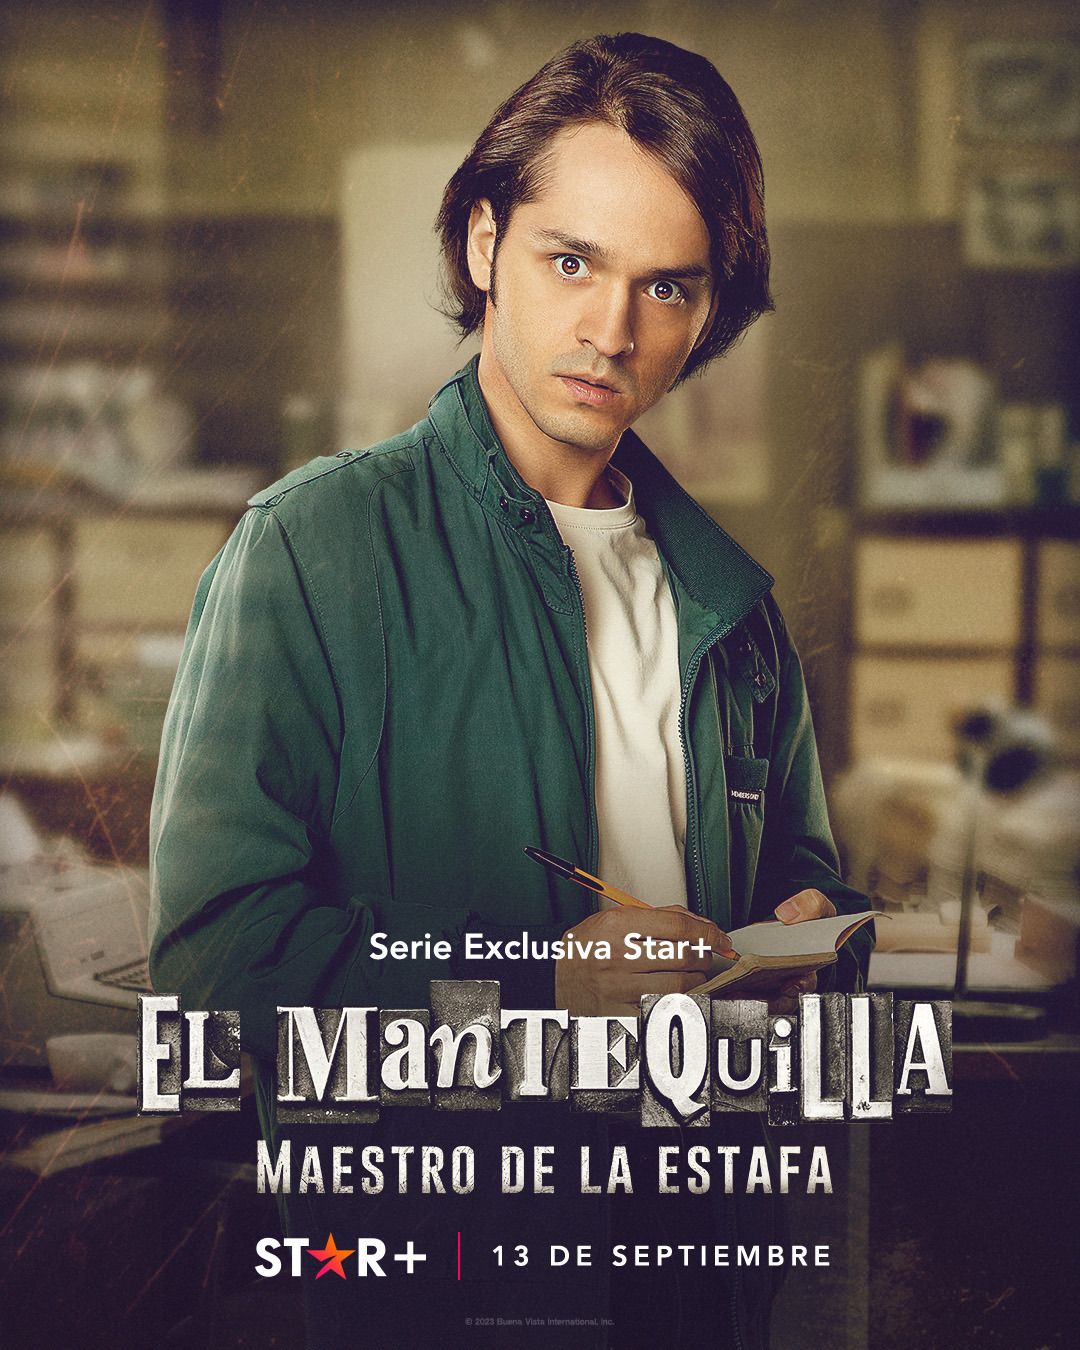 Extra Large TV Poster Image for El Mantequilla: Maestro De La Estafa (#2 of 5)